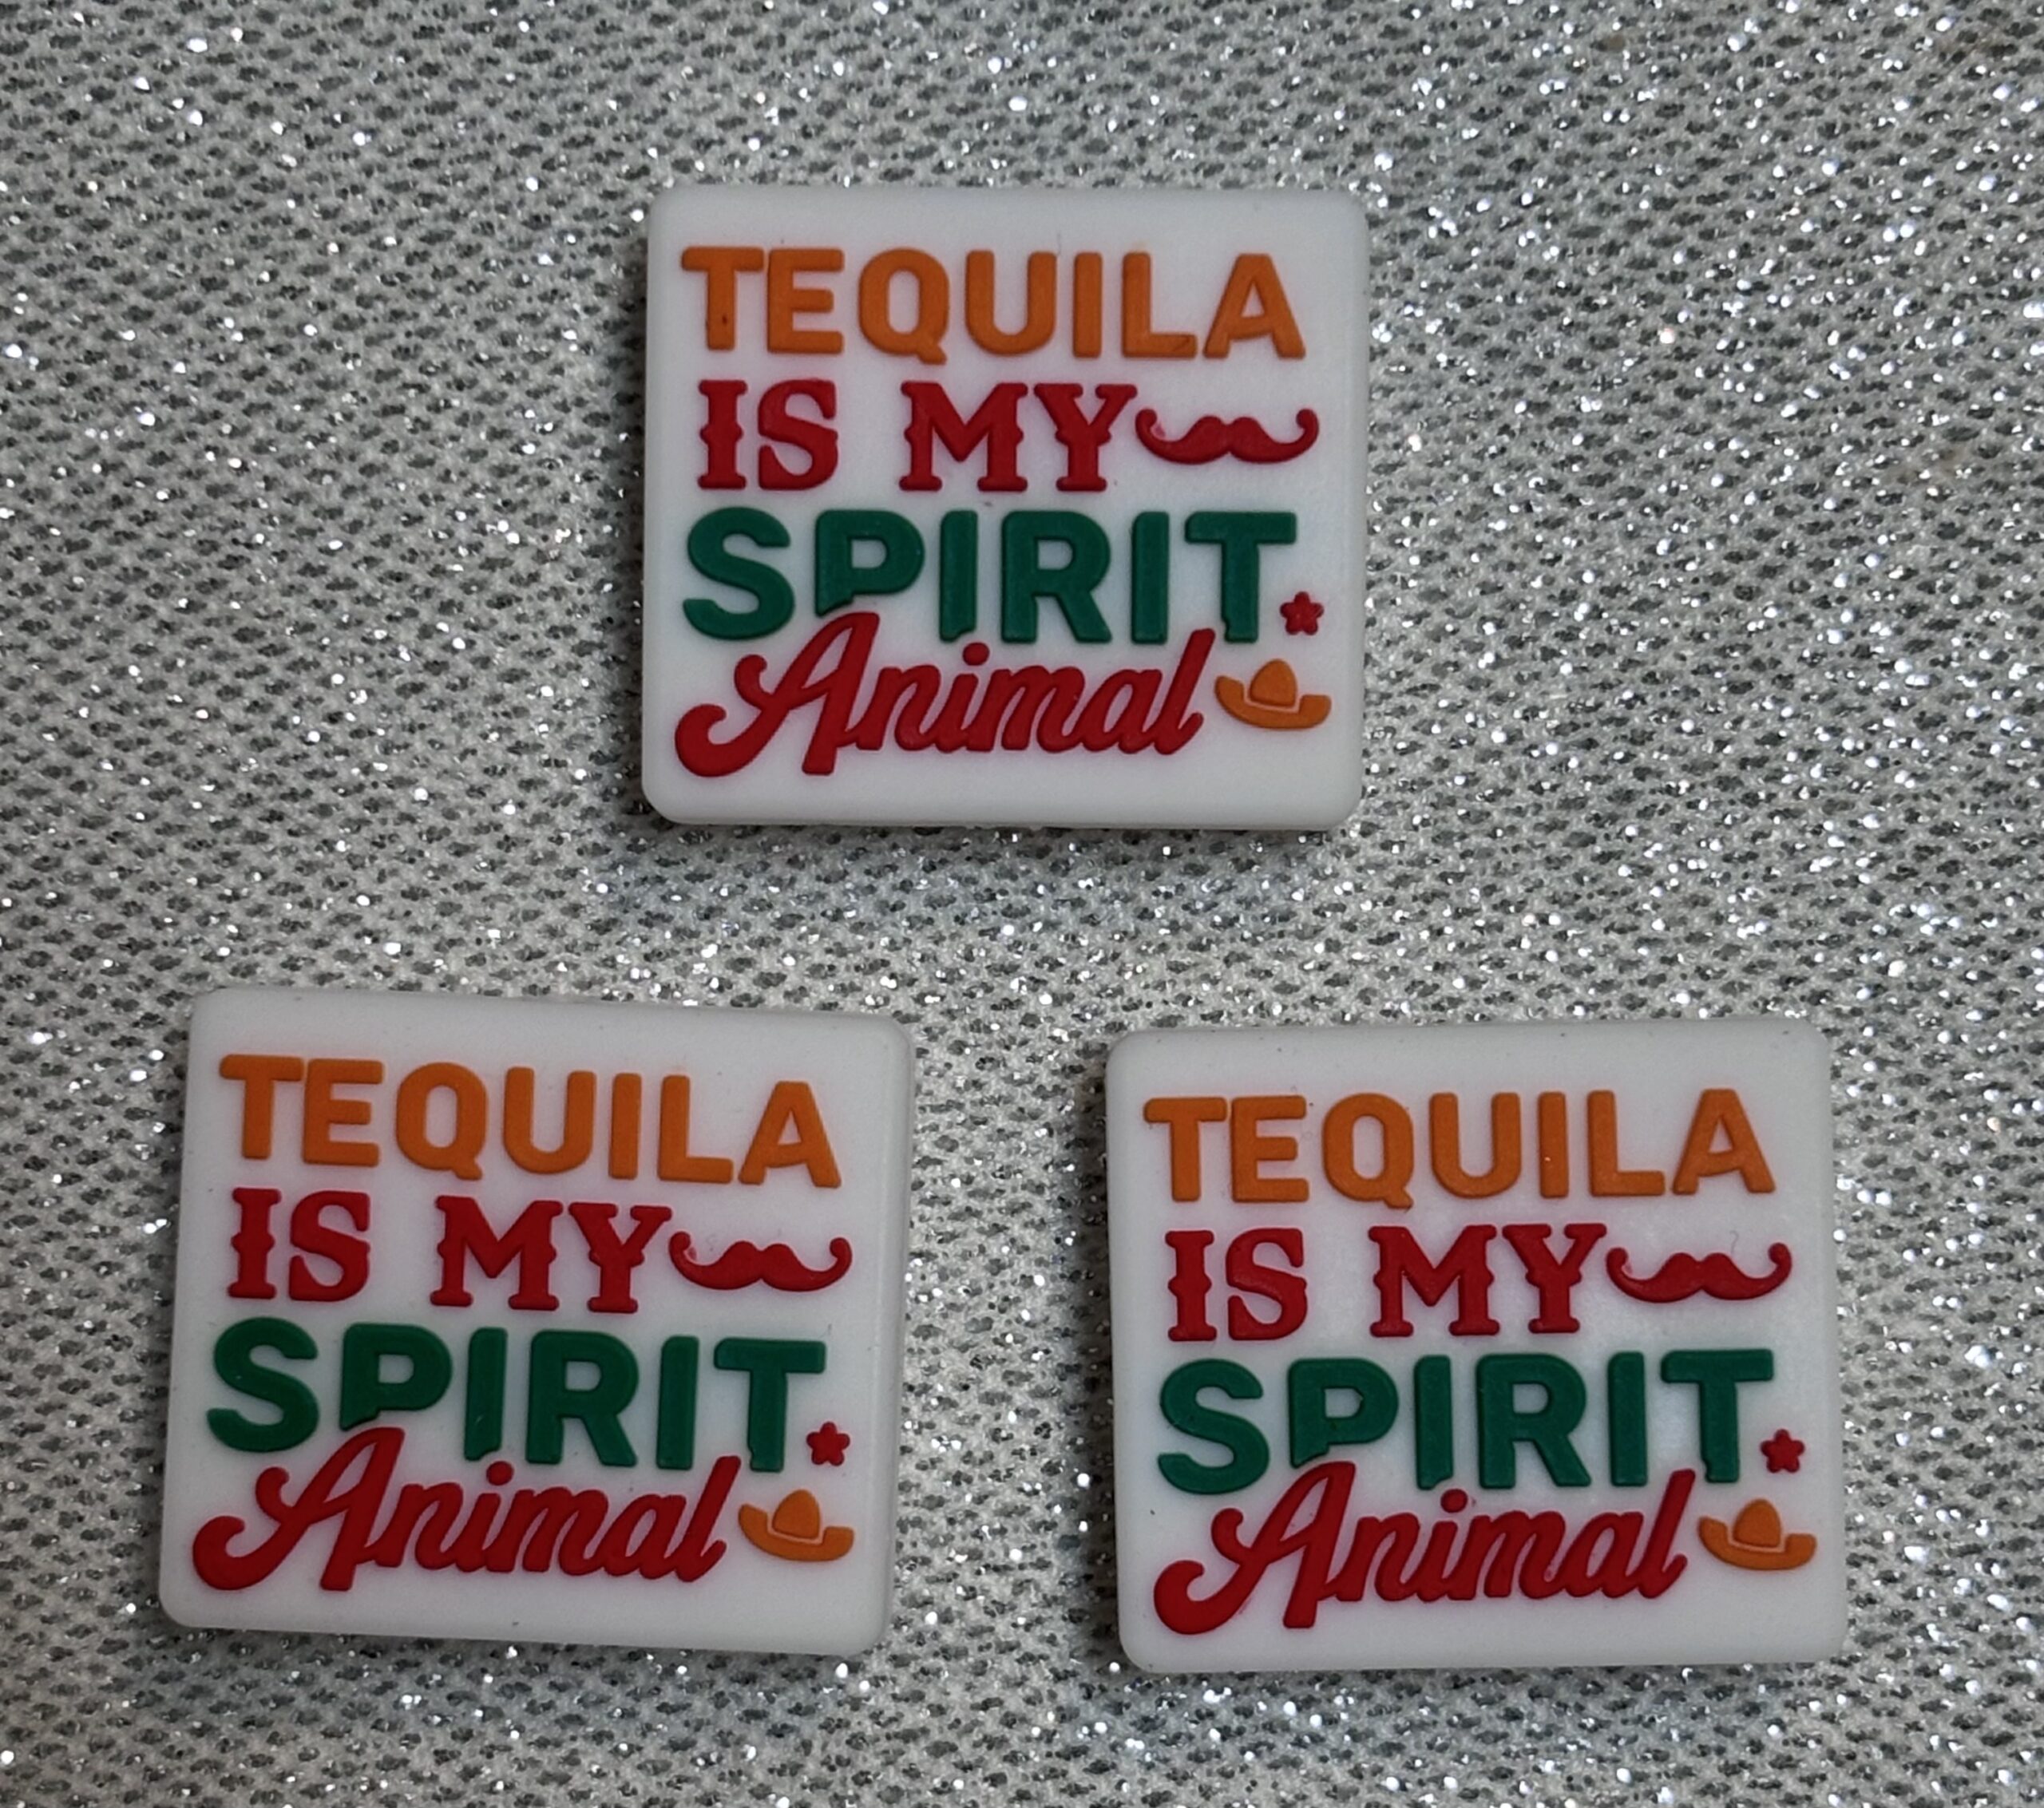 Tequila is my spirit animal beads